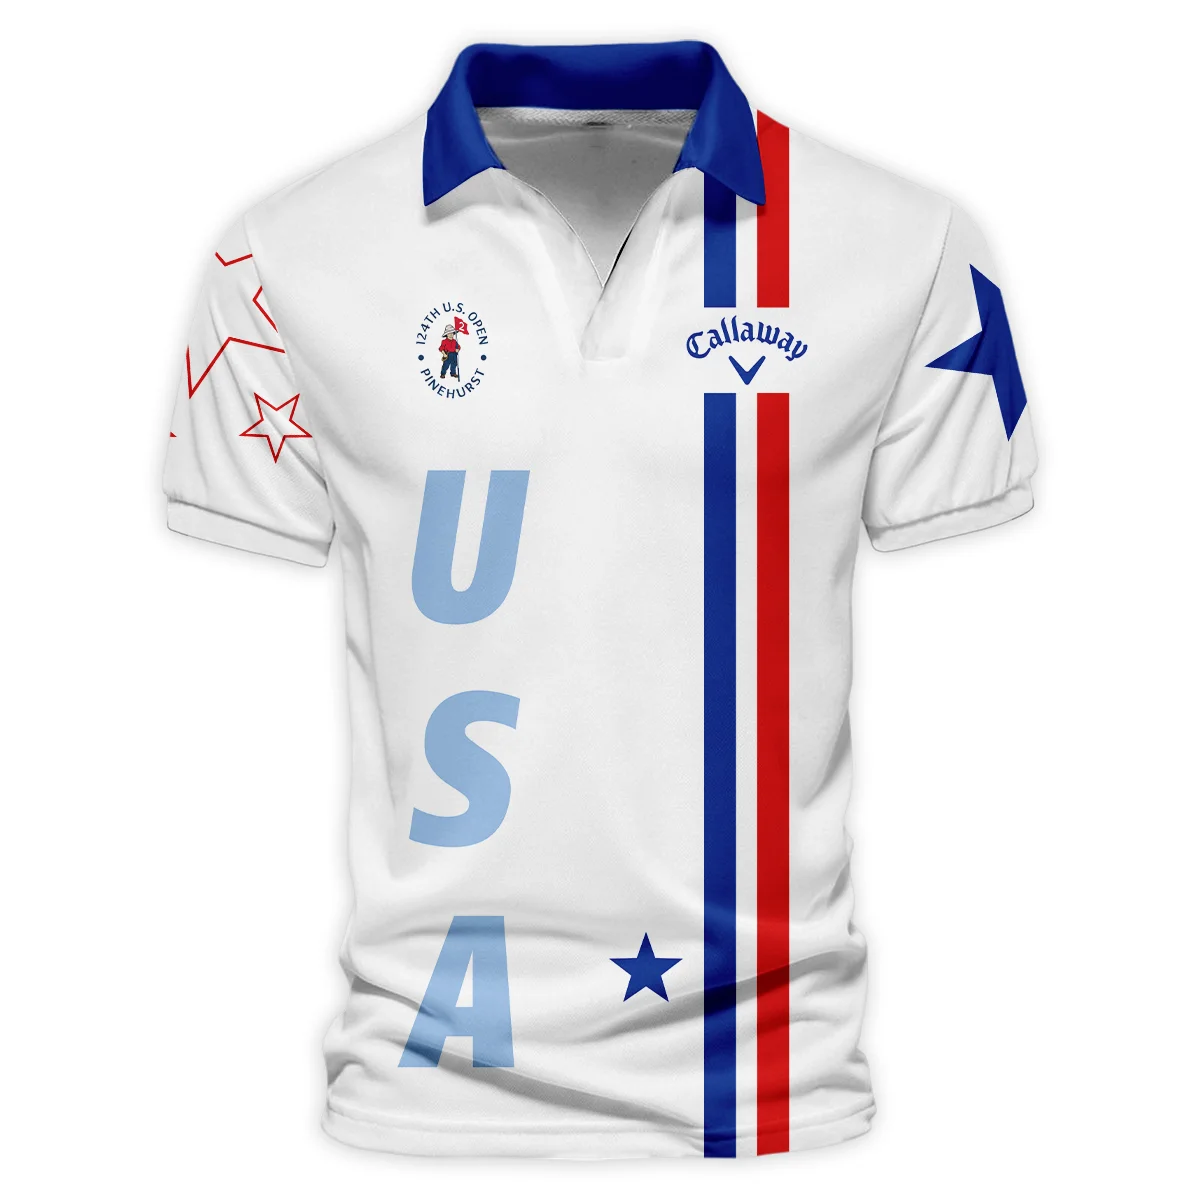 124th U.S. Open Pinehurst Callaway Blue Red Line White Hoodie Shirt Style Classic Hoodie Shirt